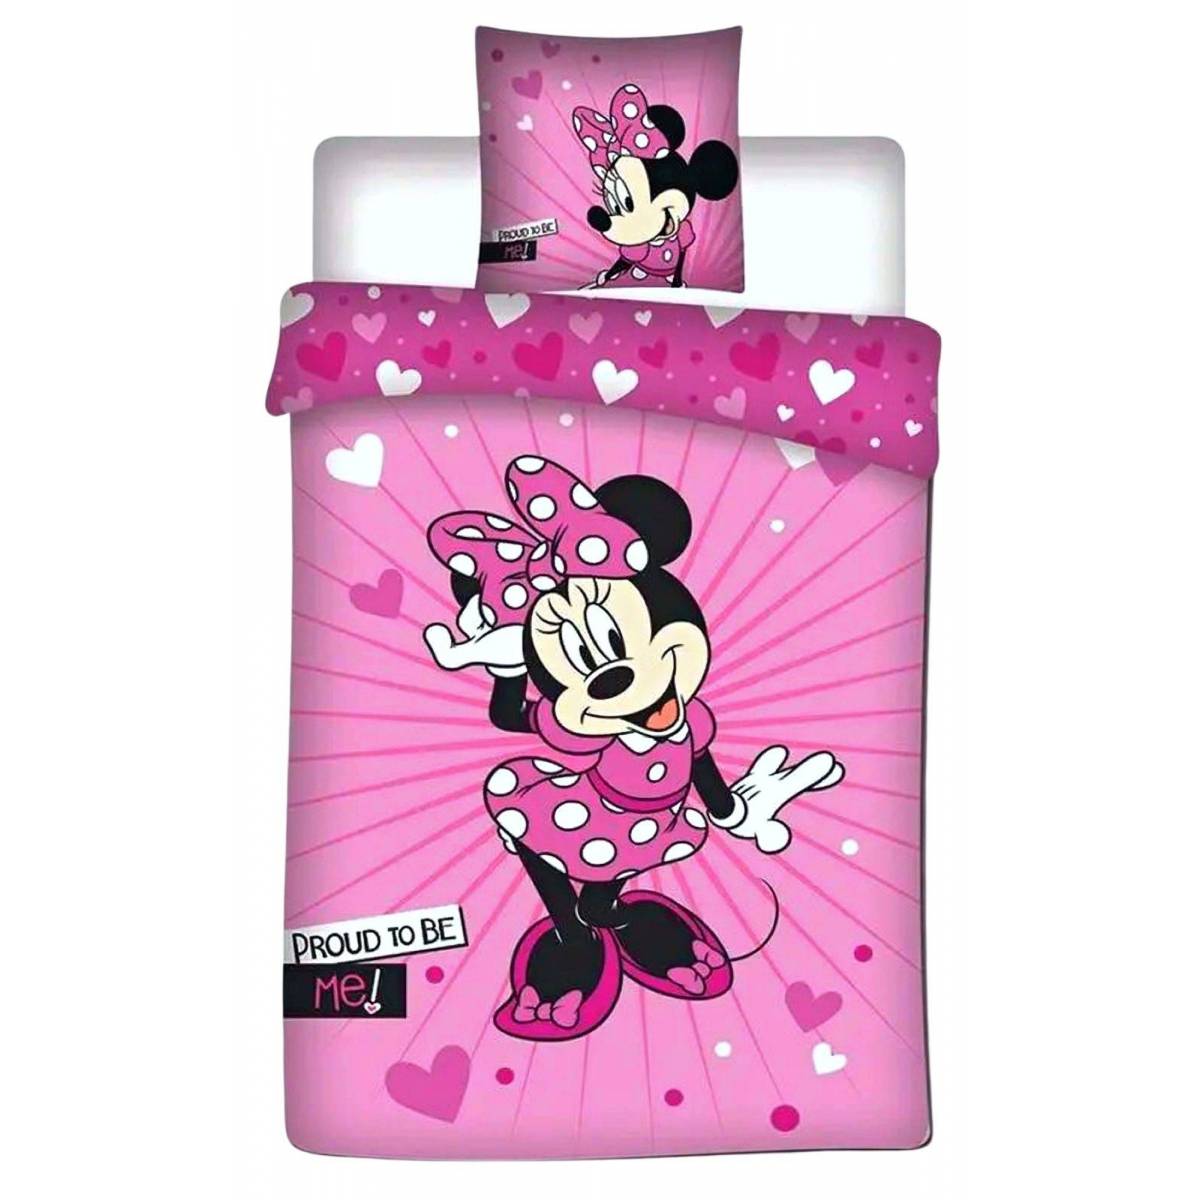 Minnie Proud To Be Me duvet cover 140x200 cm + Pillowcase